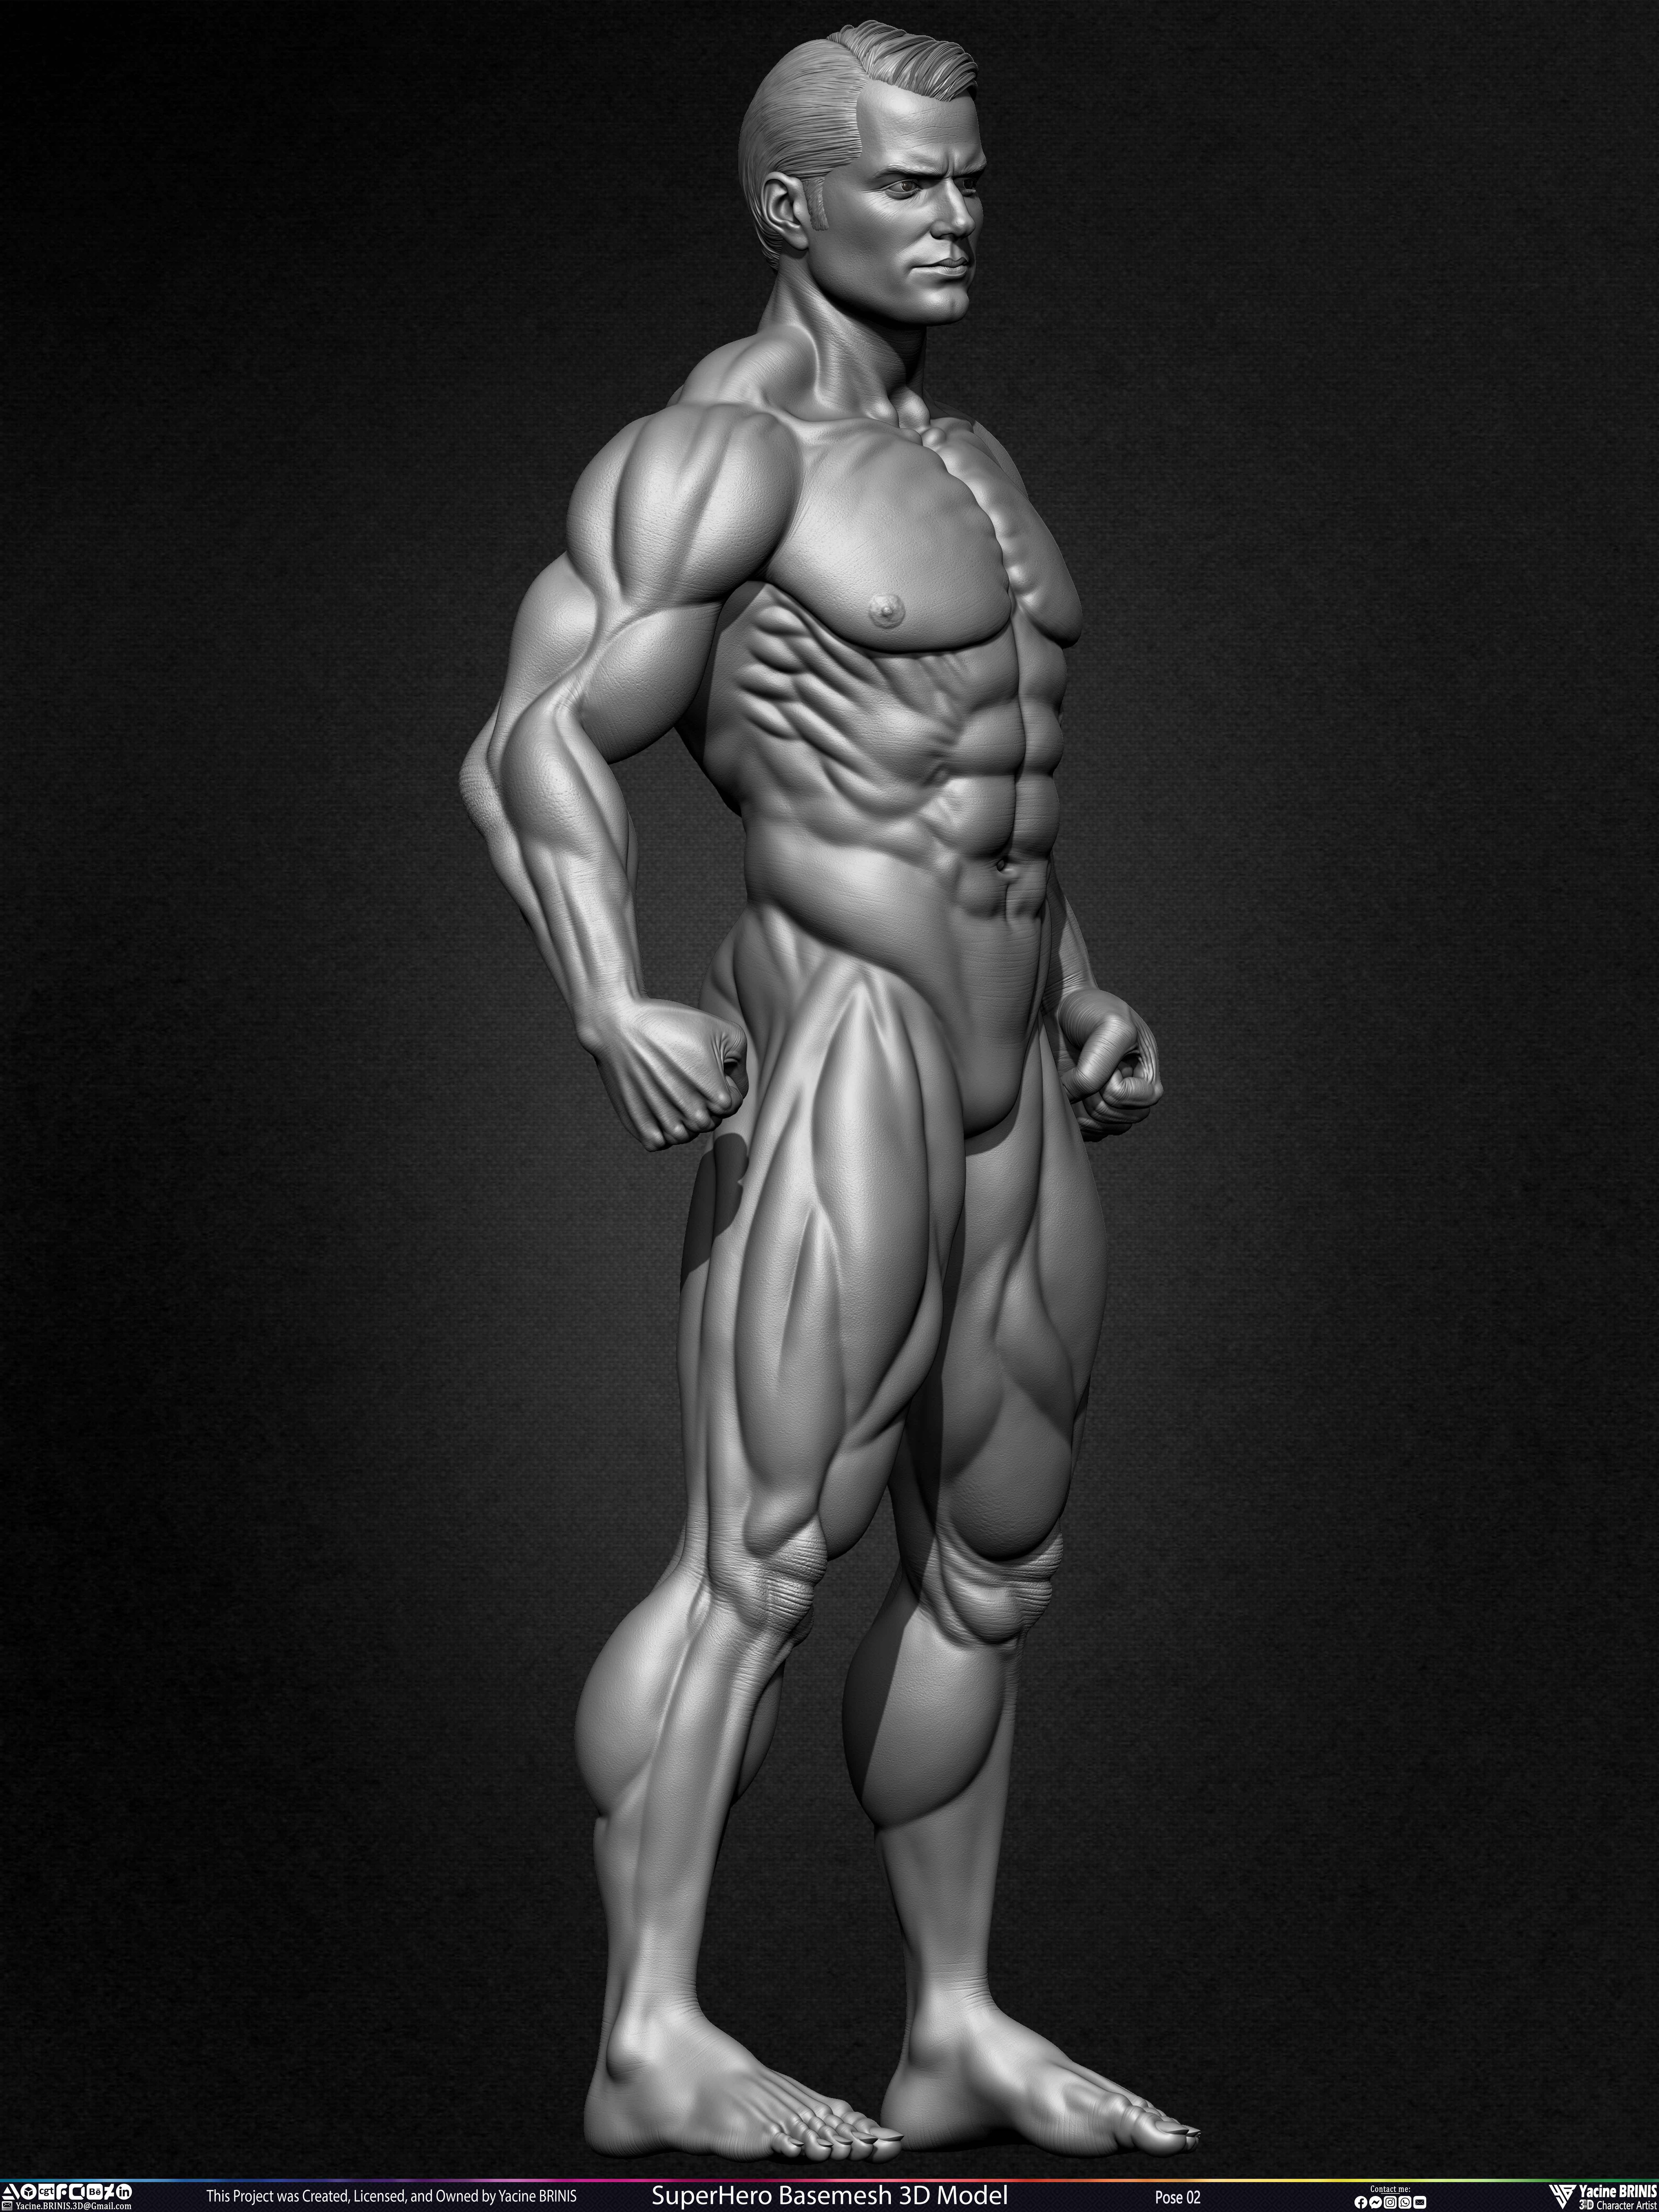 Super-Hero Basemesh 3D Model - Henry Cavill- Man of Steel - Superman - Pose 02 Sculpted by Yacine BRINIS Set 006